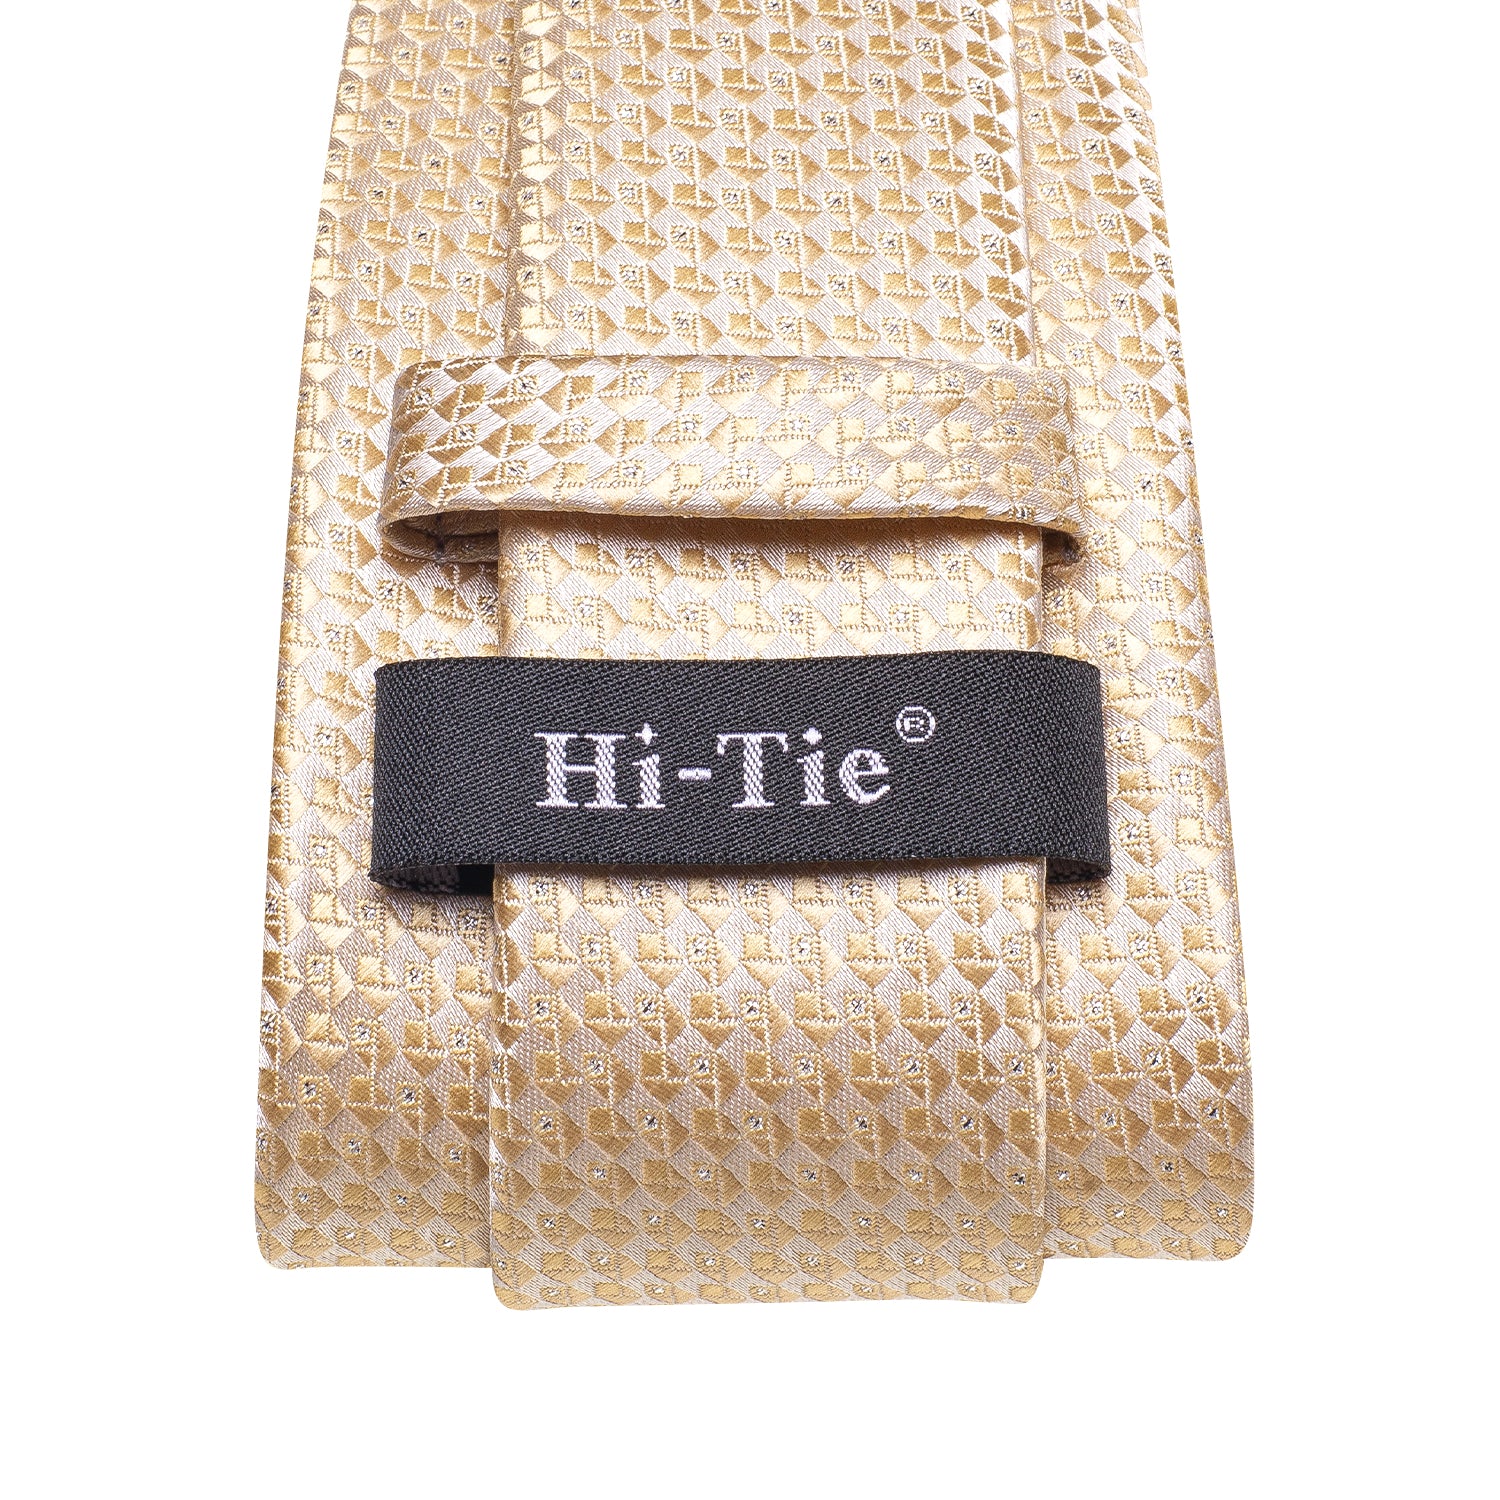 New Champagne Novelty Plaid Tie Pocket Square Cufflinks Set